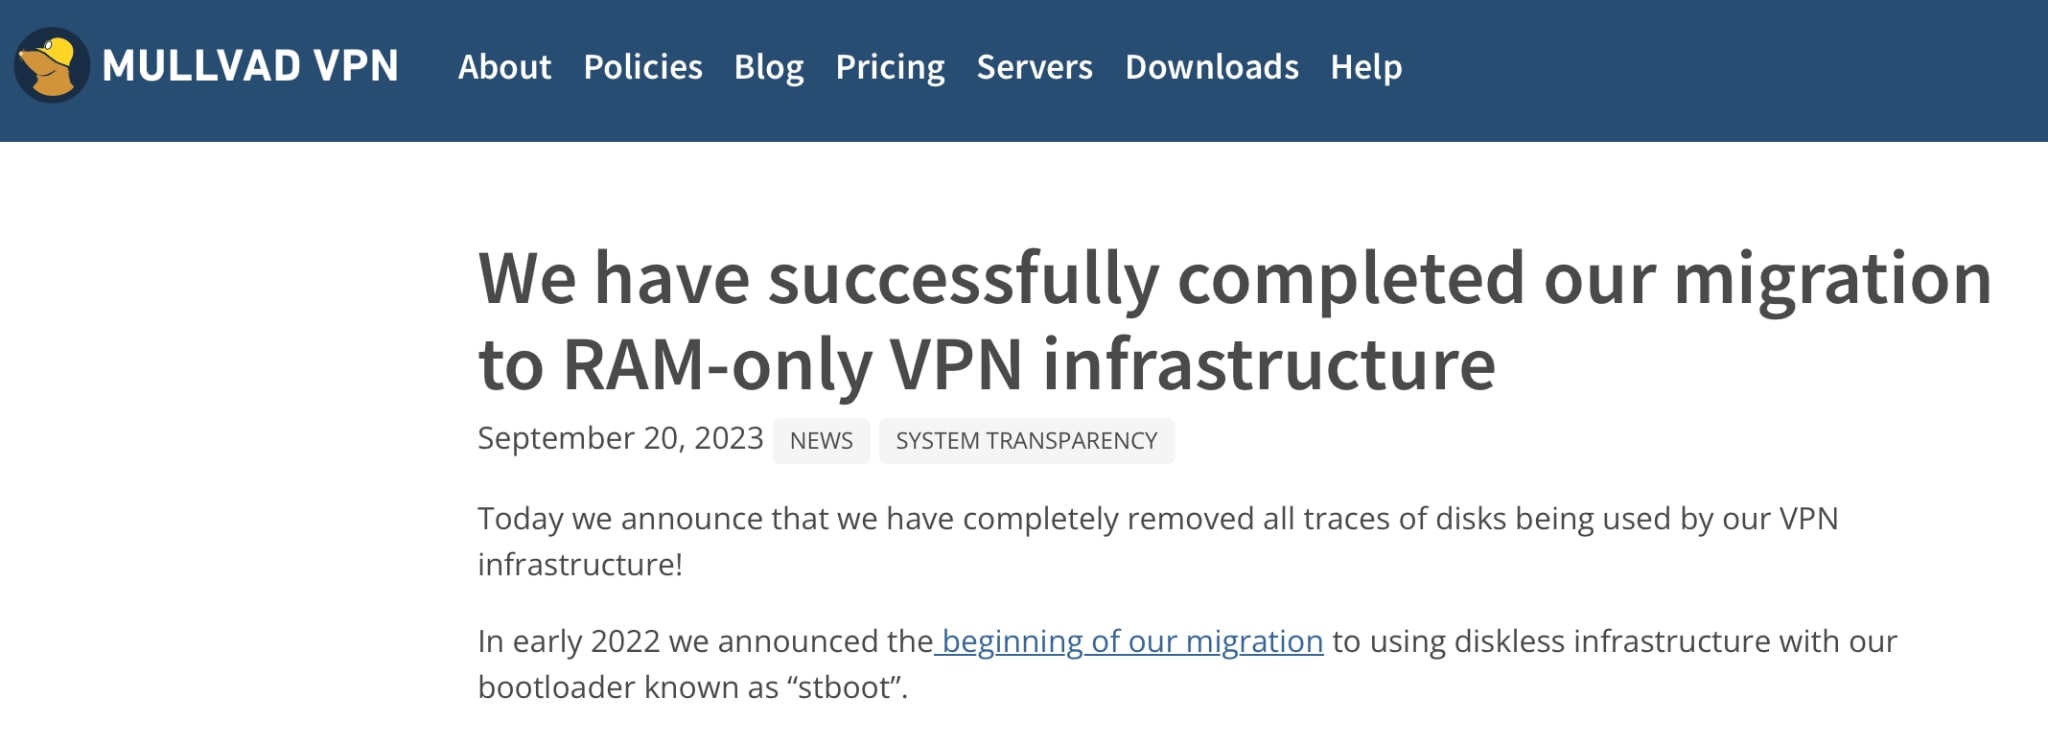 Mullvad VPN website blog explaining the use of diskless infrastructure